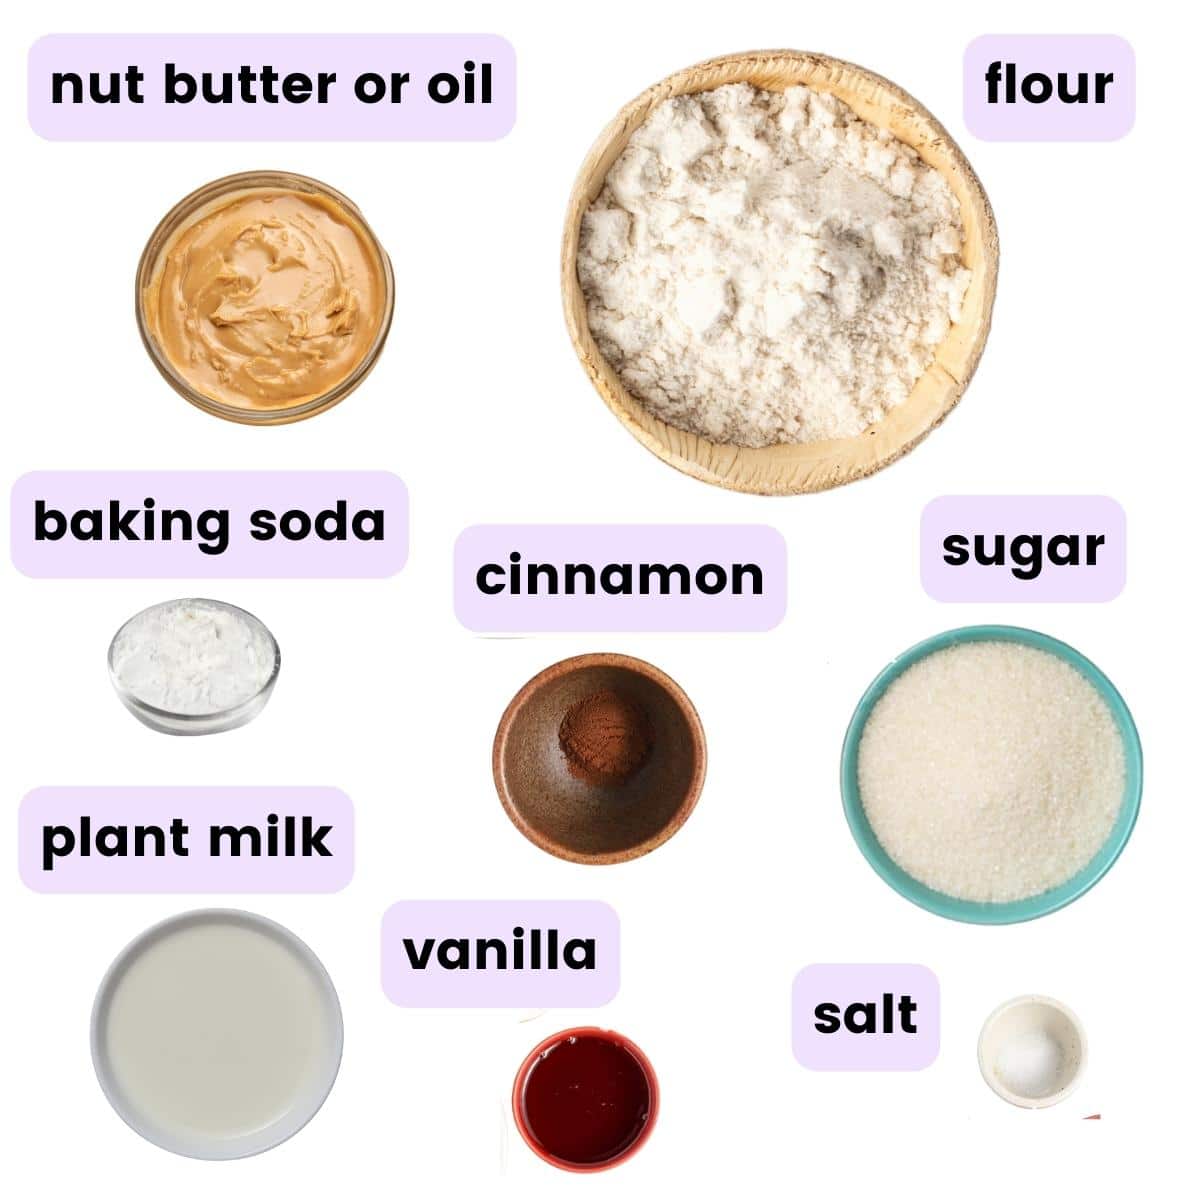 flour, sugar, nut butter, vanilla, salt, plant milk, cinnamon and baking soda